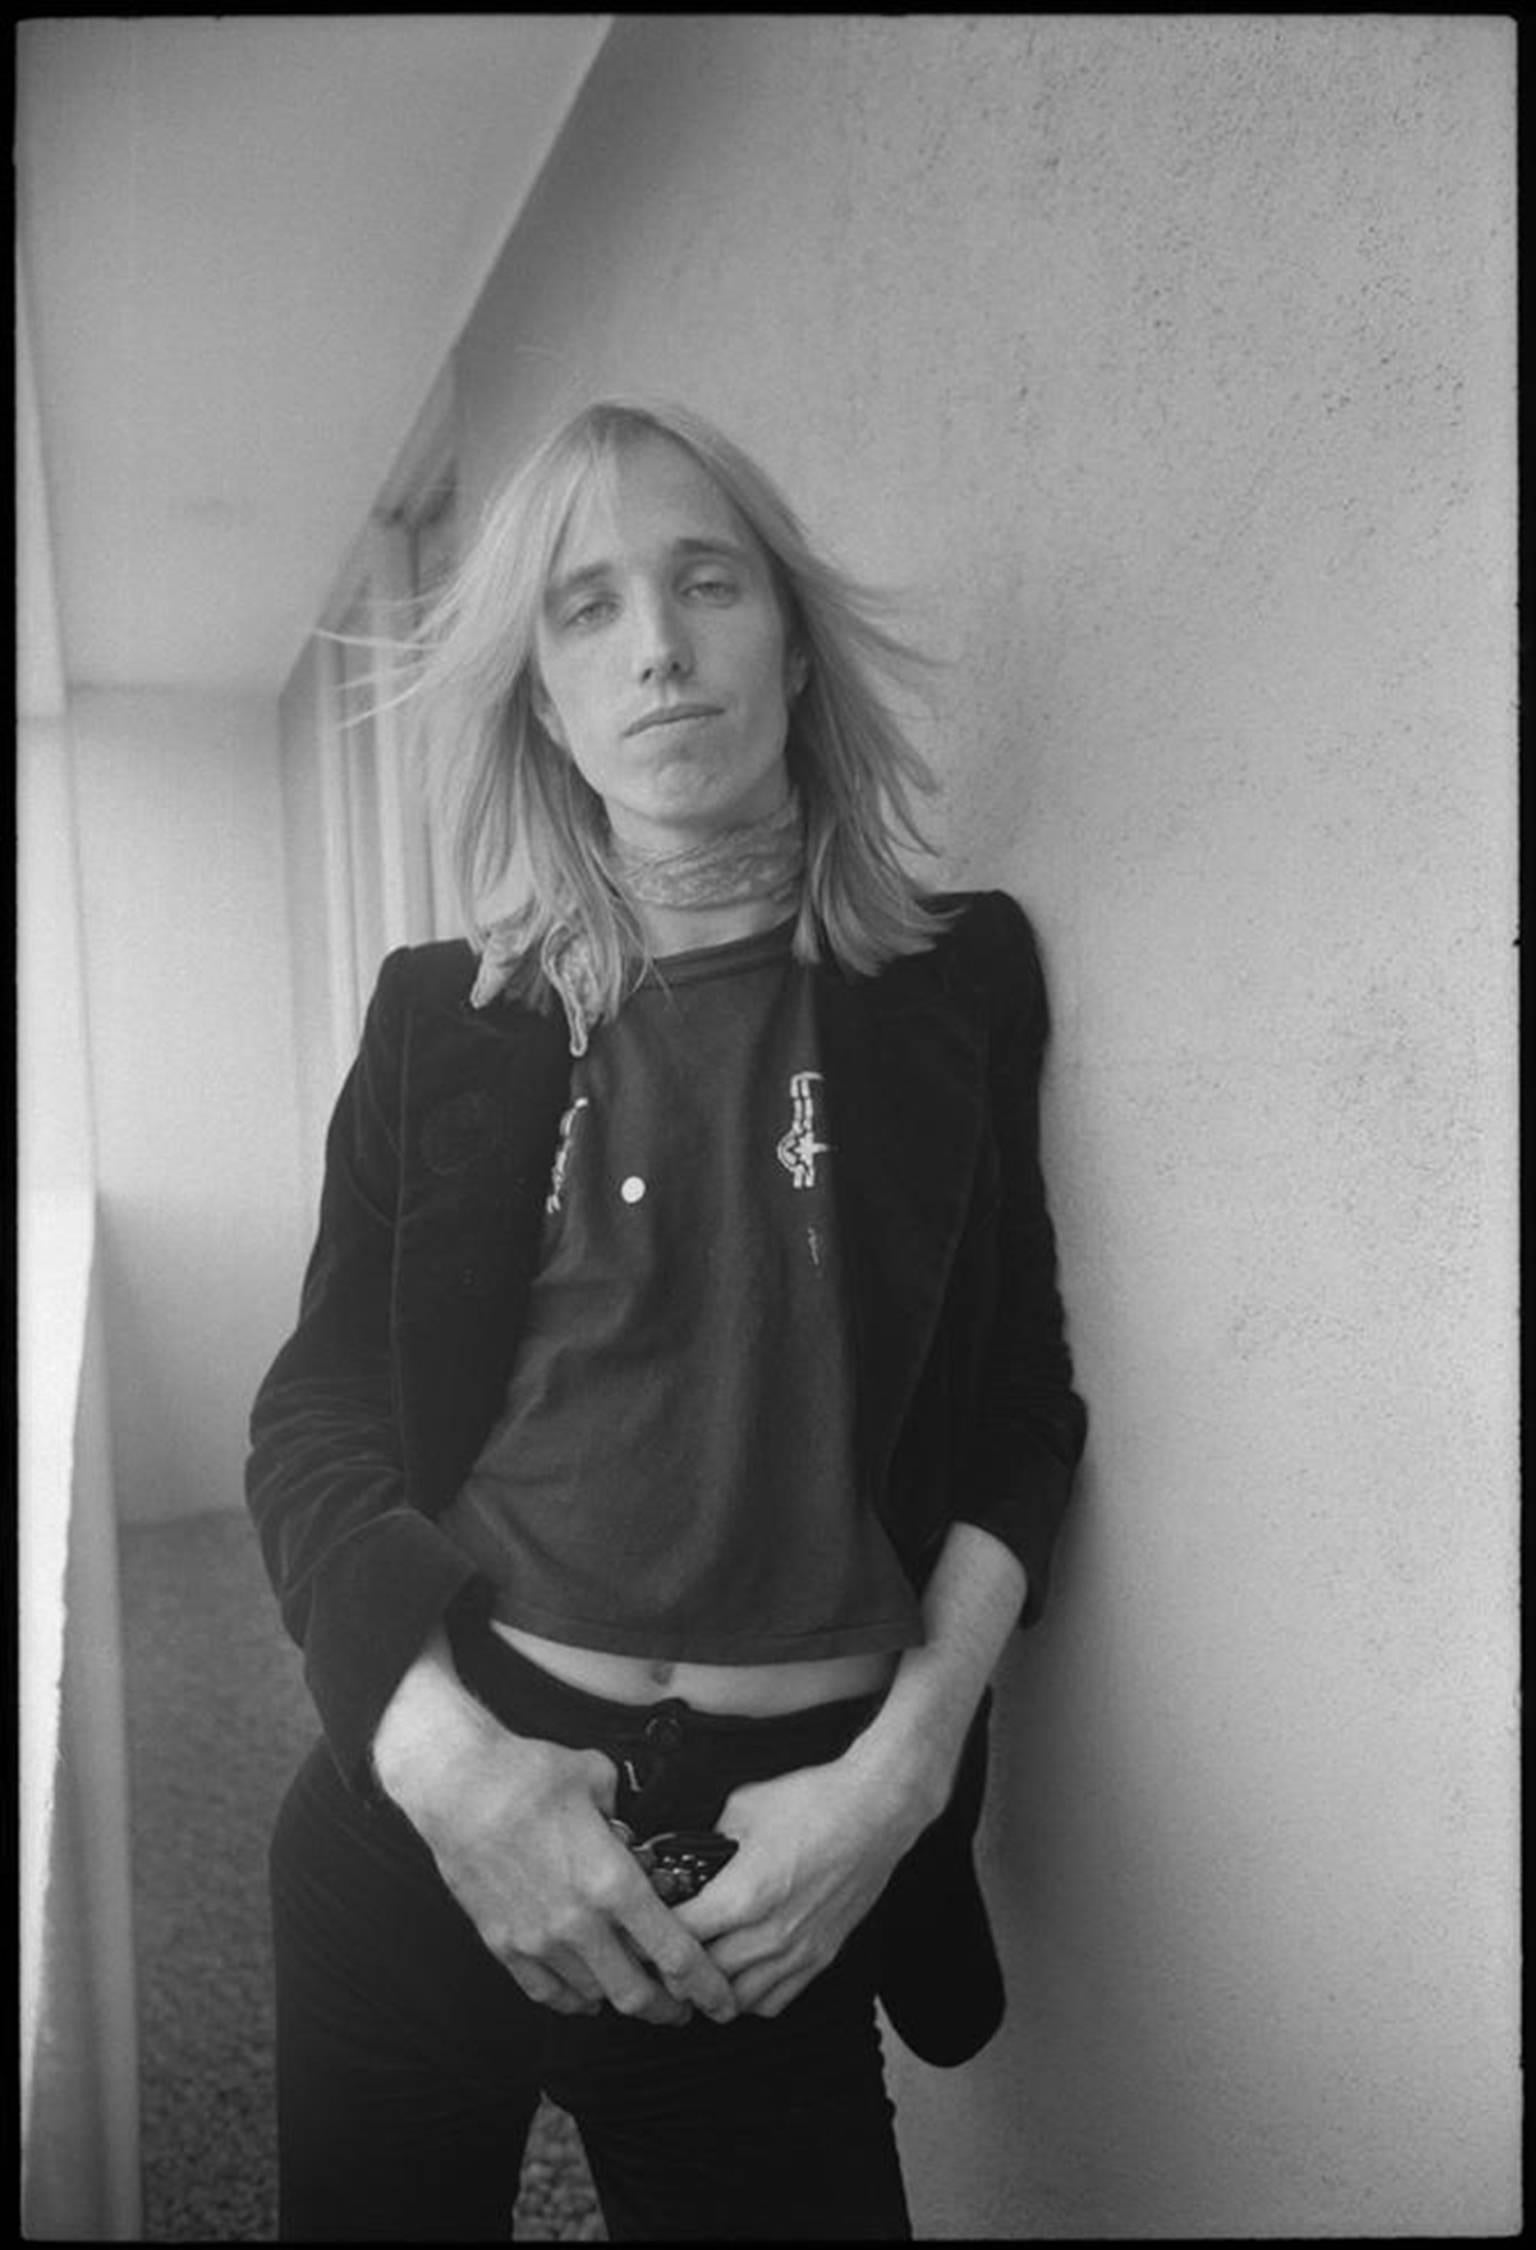 Michael Zagaris Black and White Photograph – Tom Petty